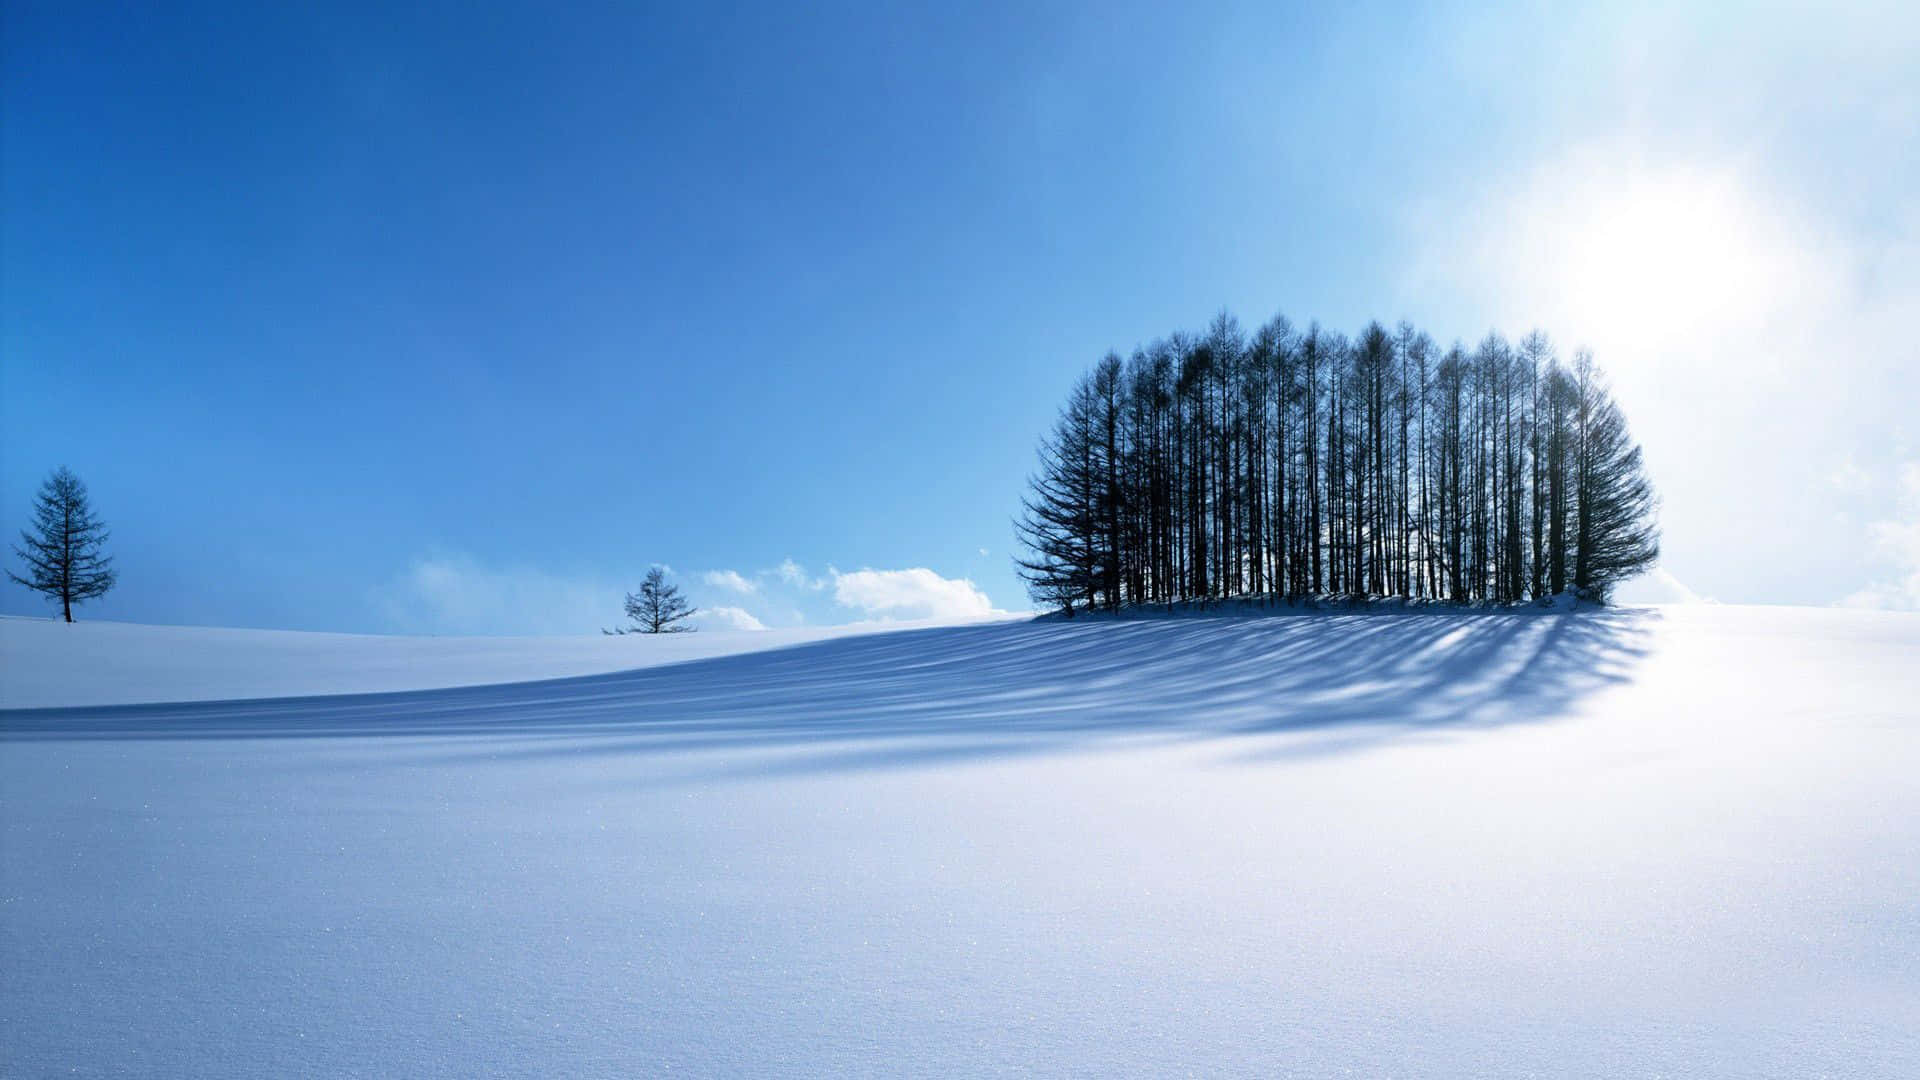 Njutav Den Fridfulla Skönheten I Ett Vinterlandskap.